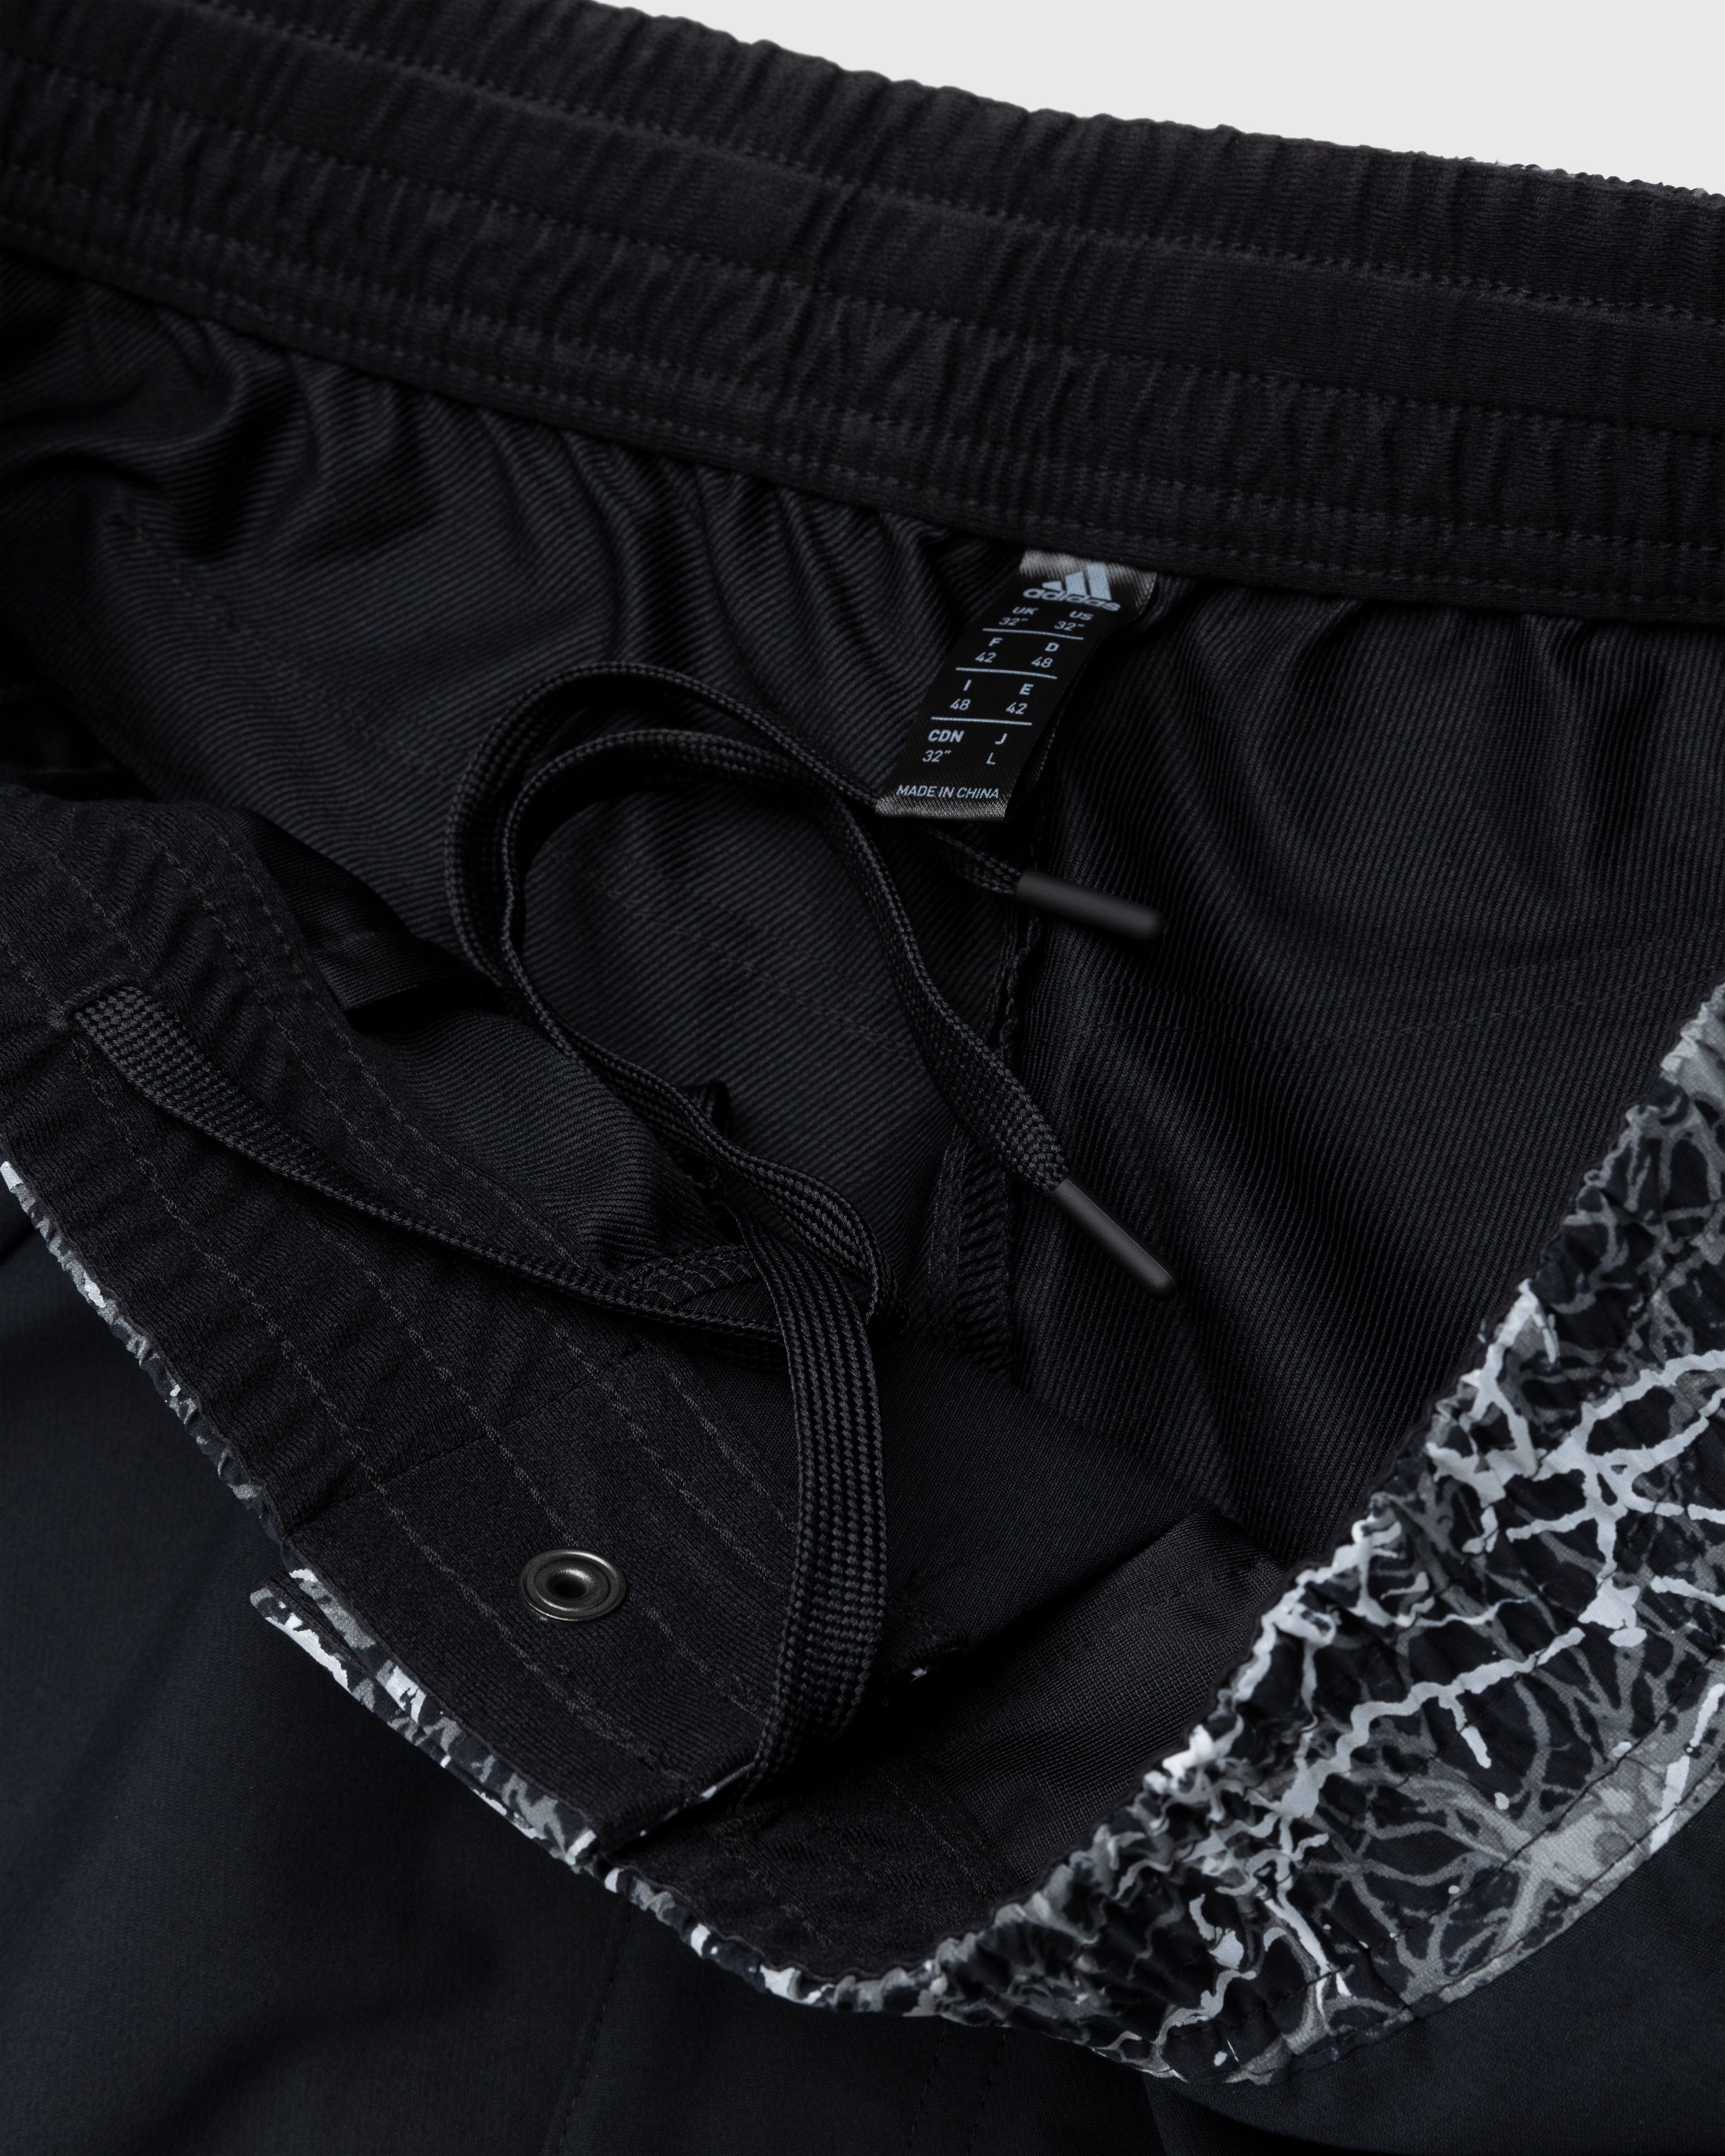 Adidas x And Wander - TERREX Hiking Pants Black - Clothing - Black - Image 5